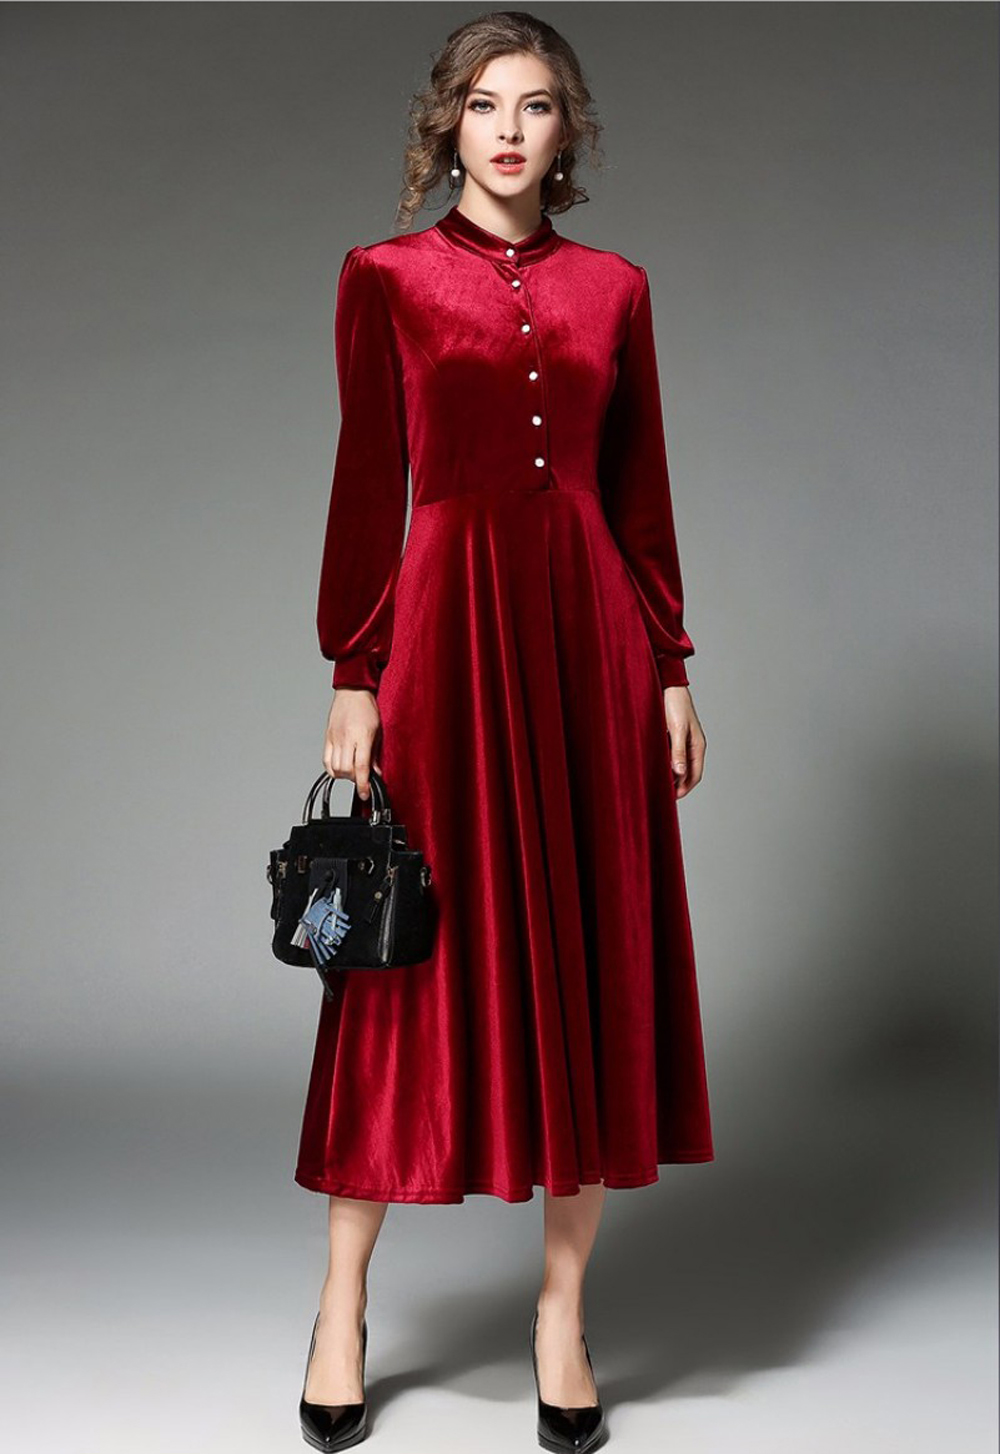 Buy Vivient Women Maroon Buttoned Velvet Dress at shopclues.com